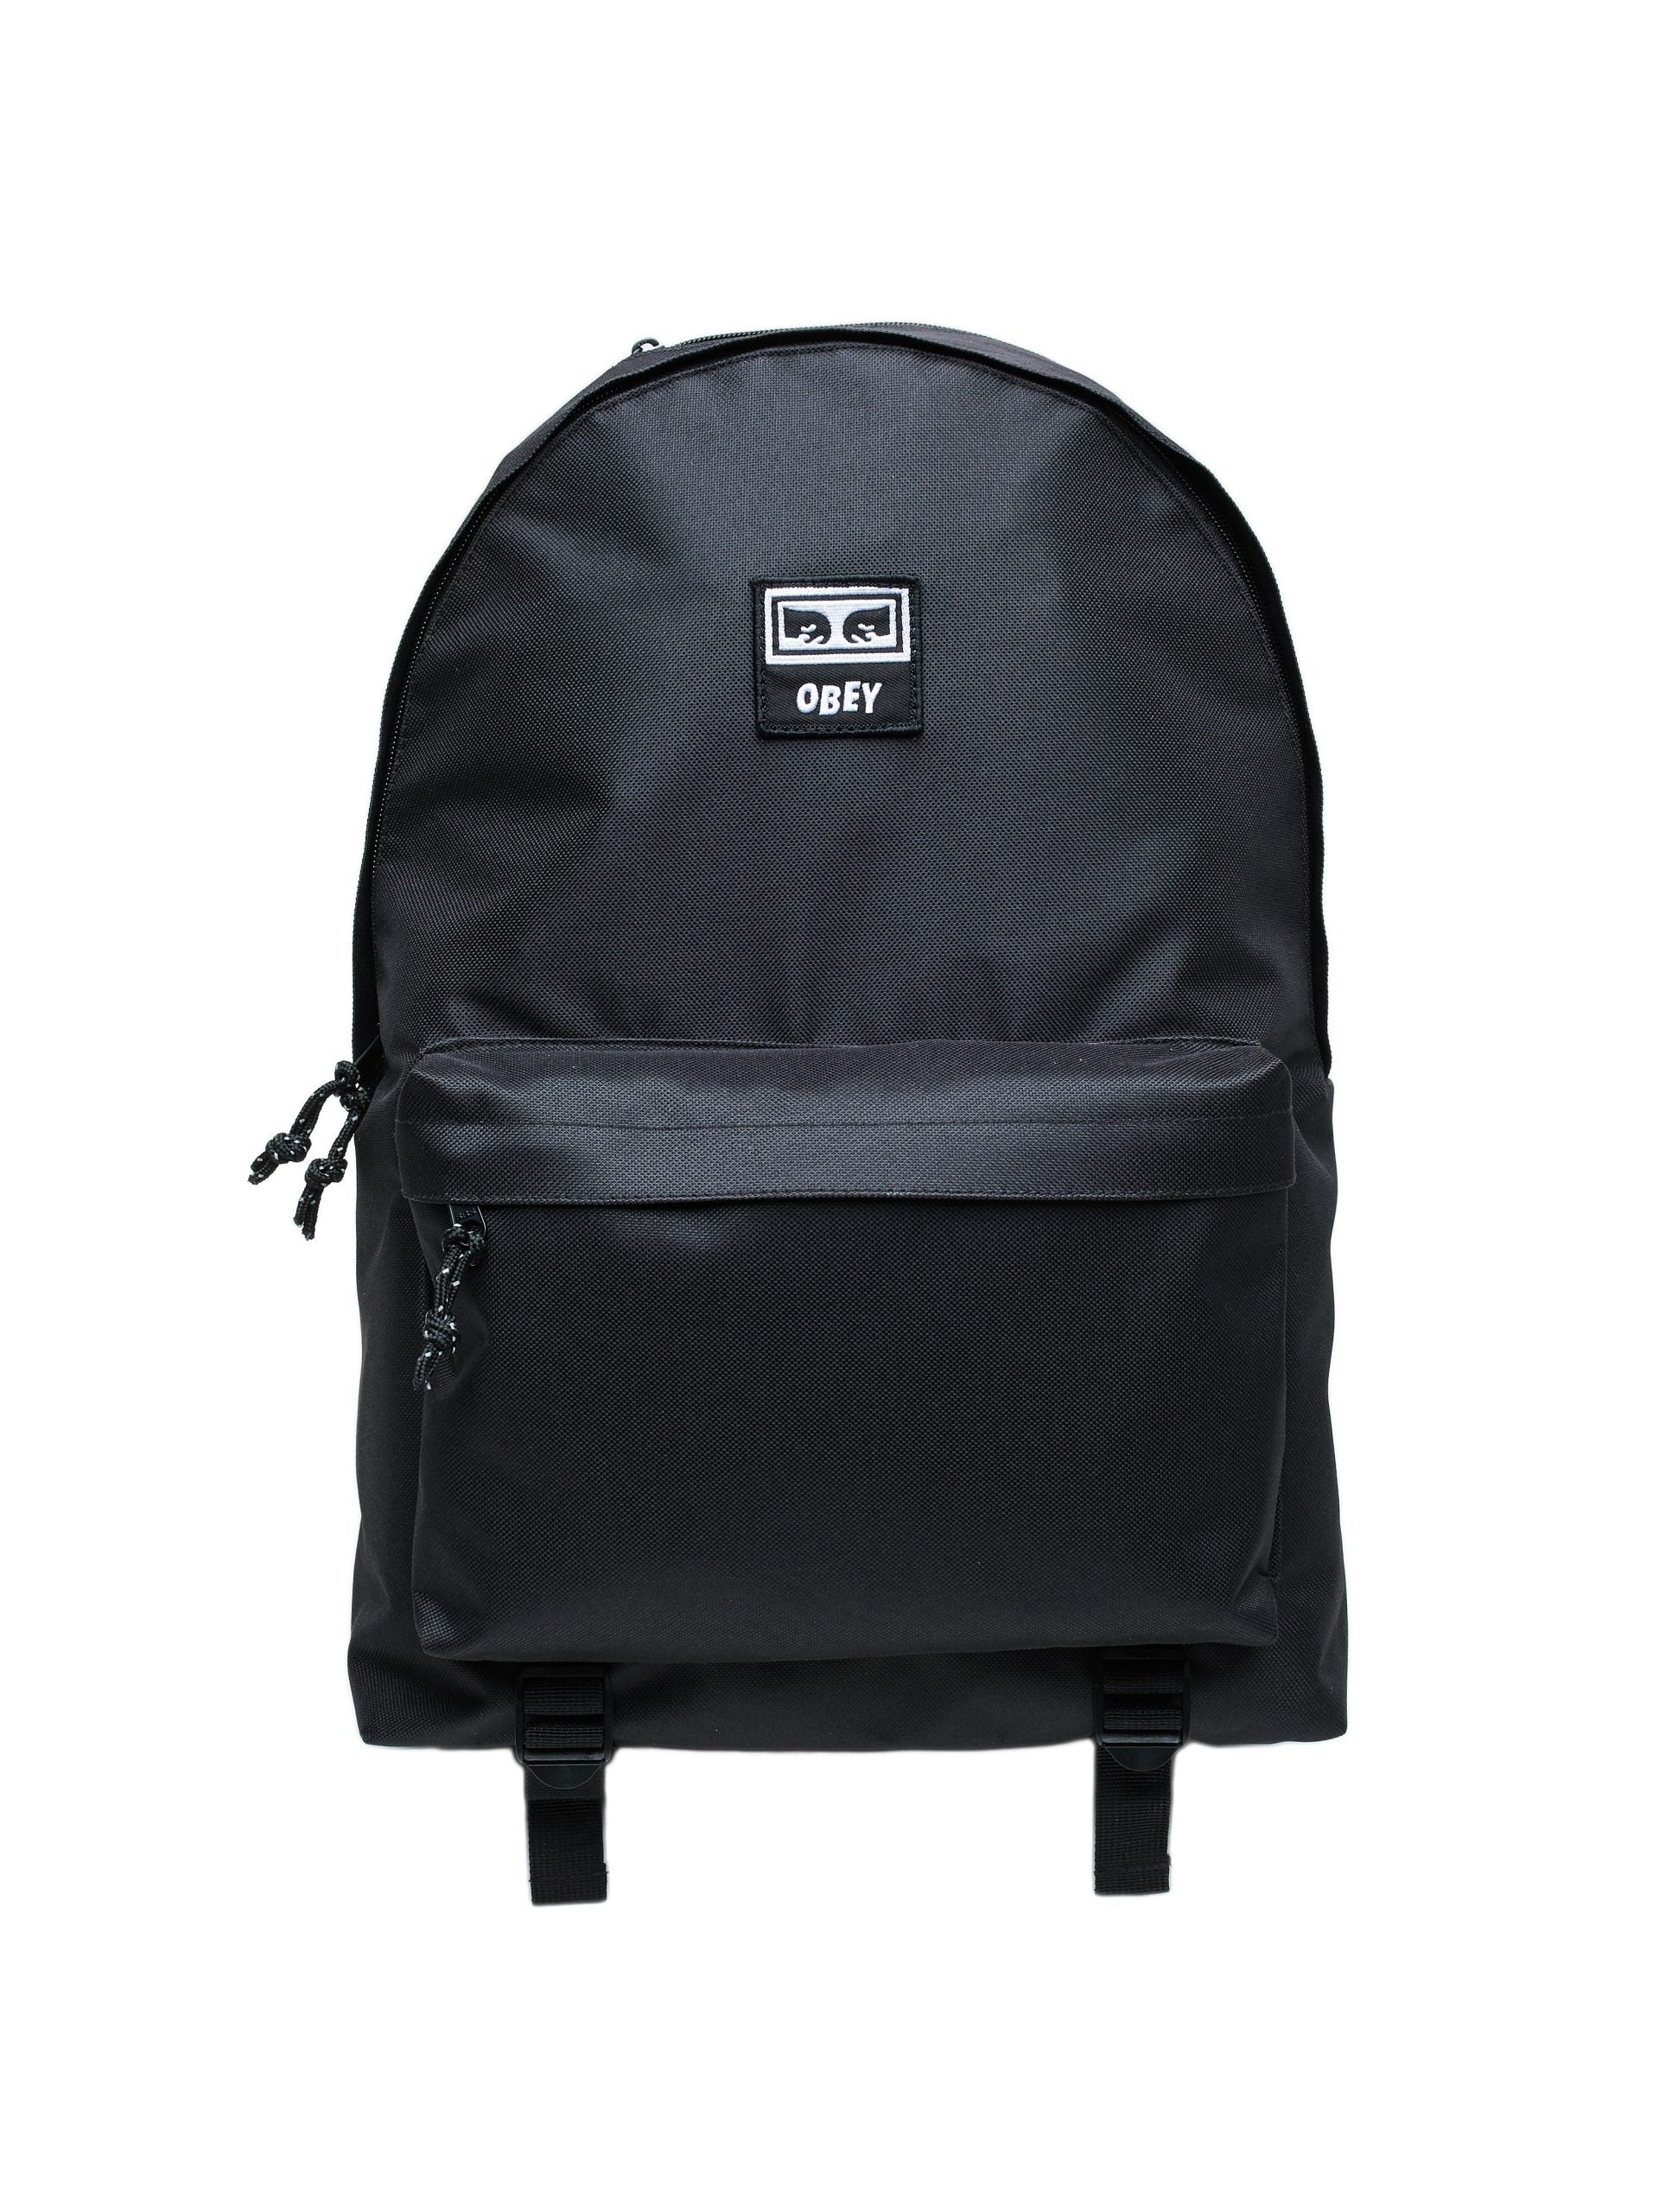 Obey Takeover Backpack In Black - Legitkicks.ca 